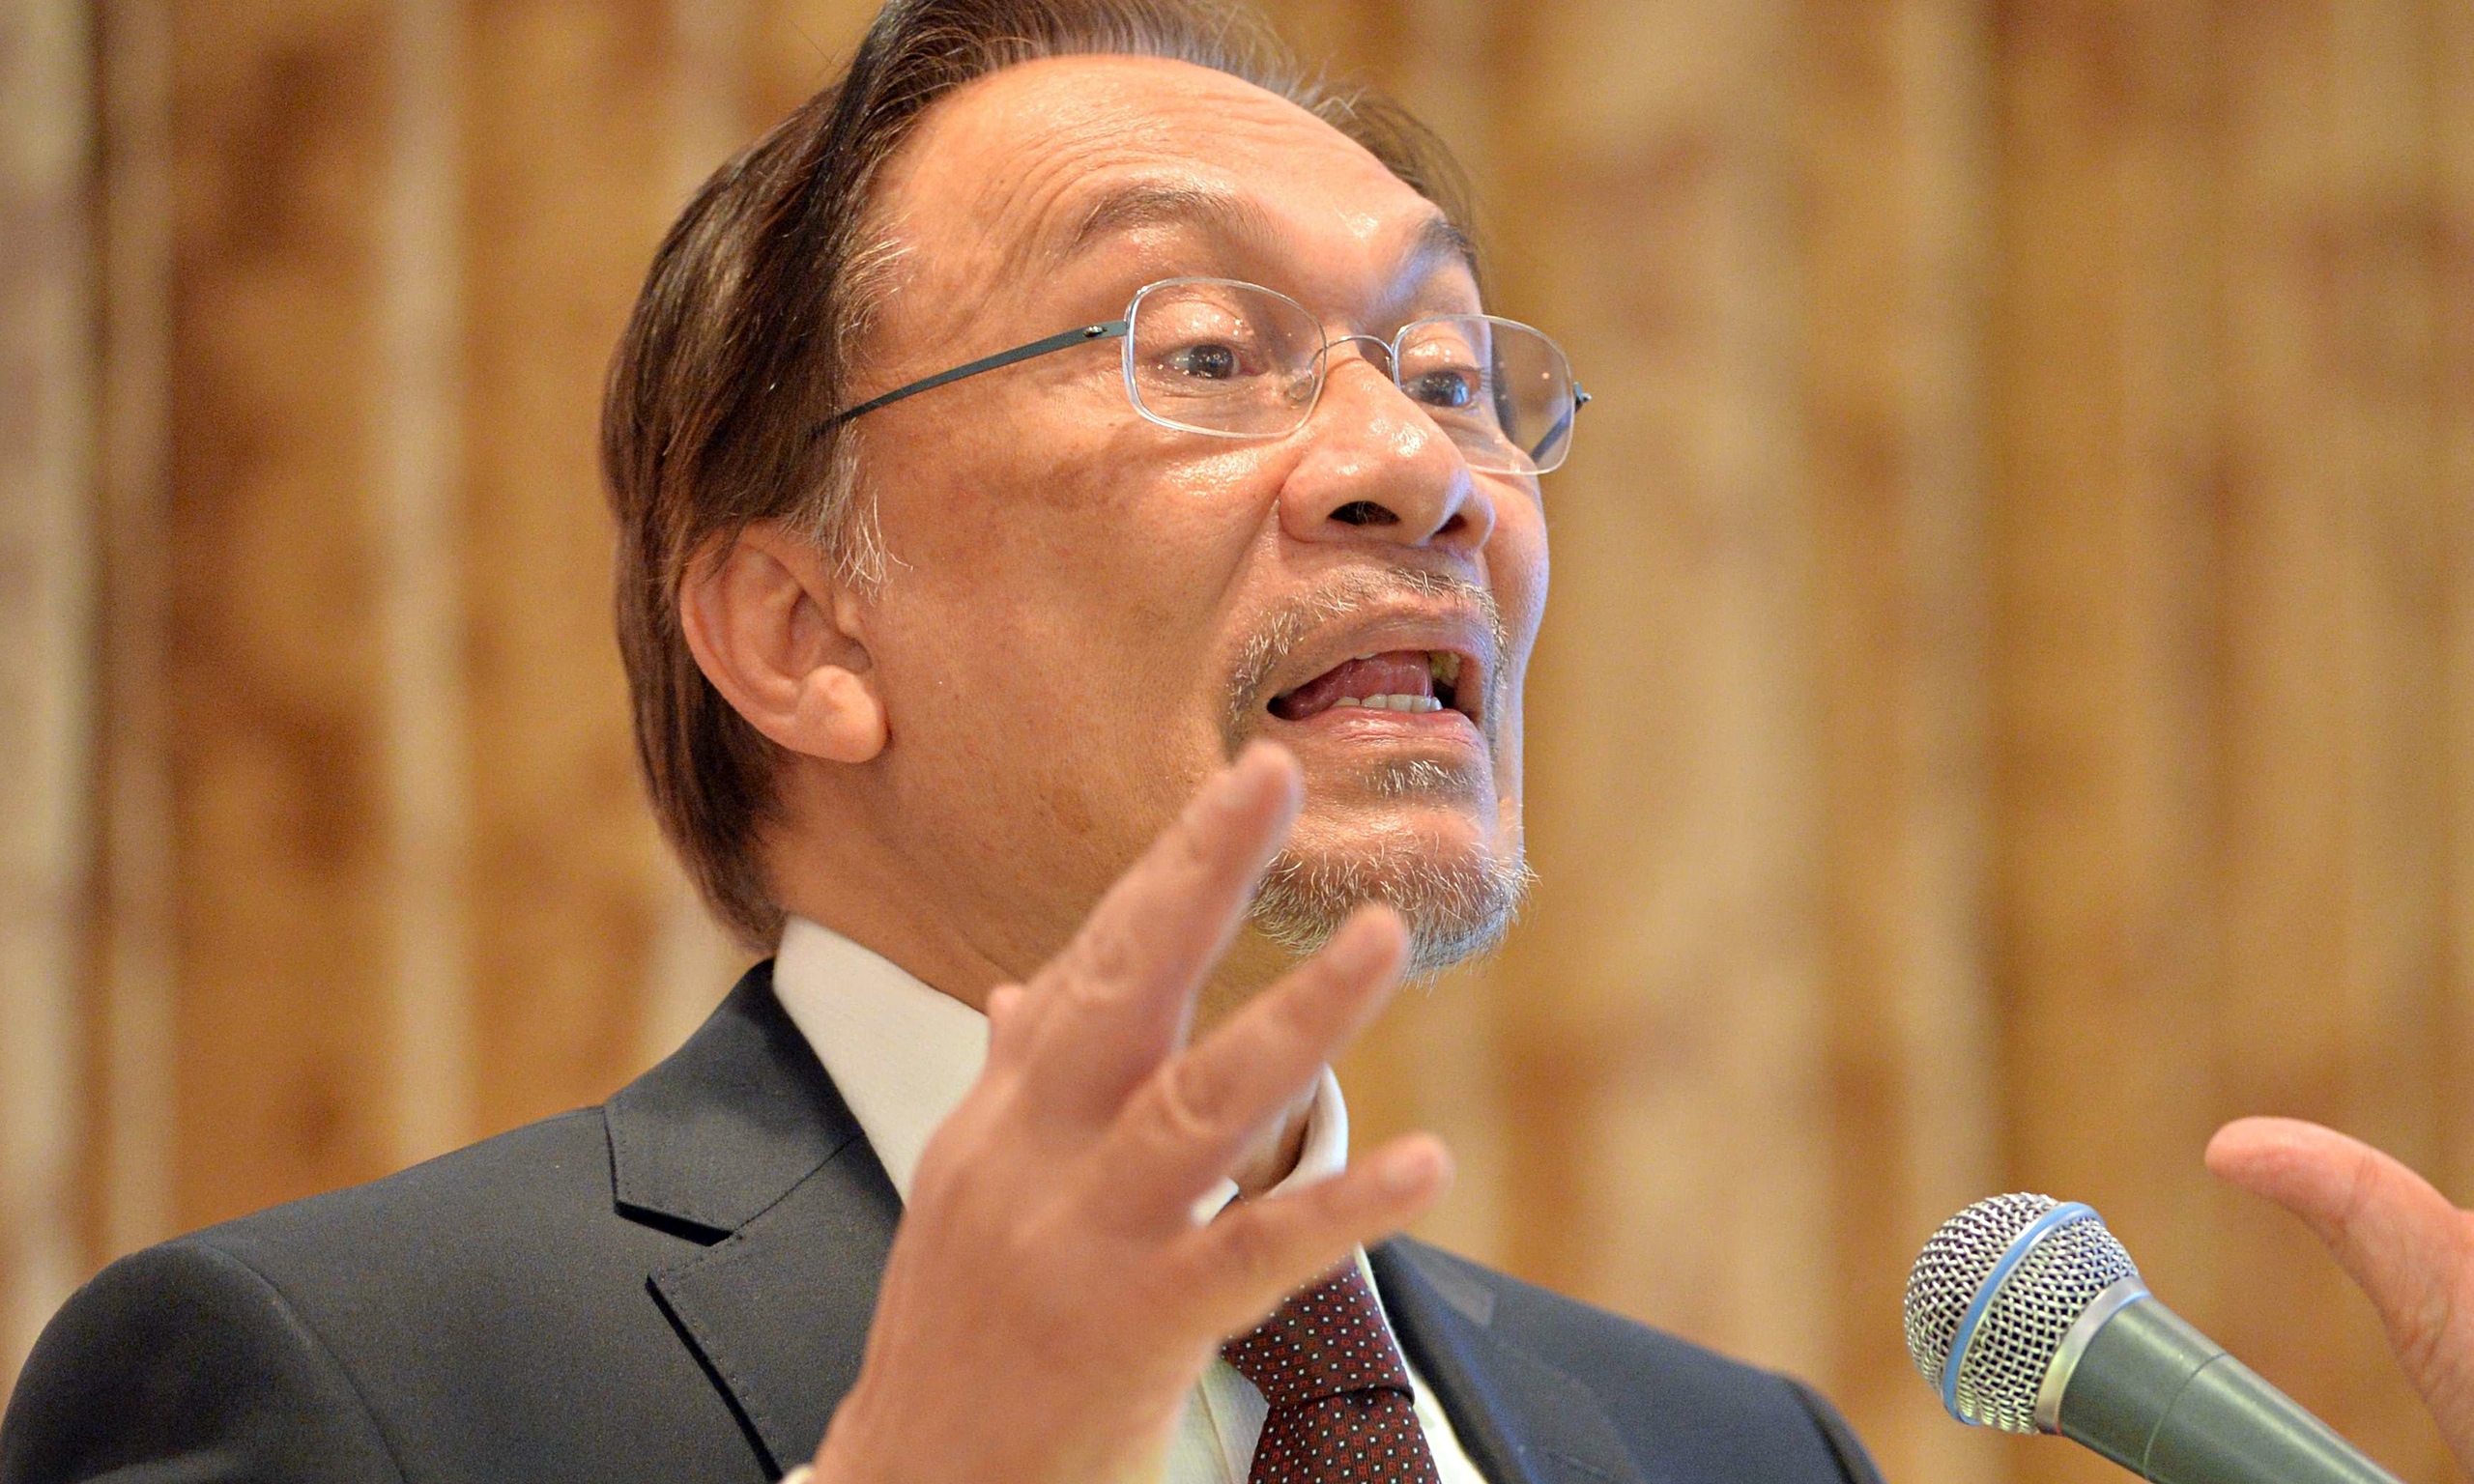 Malaysian politician Anwar Ibrahim jailed for five years on sodomy